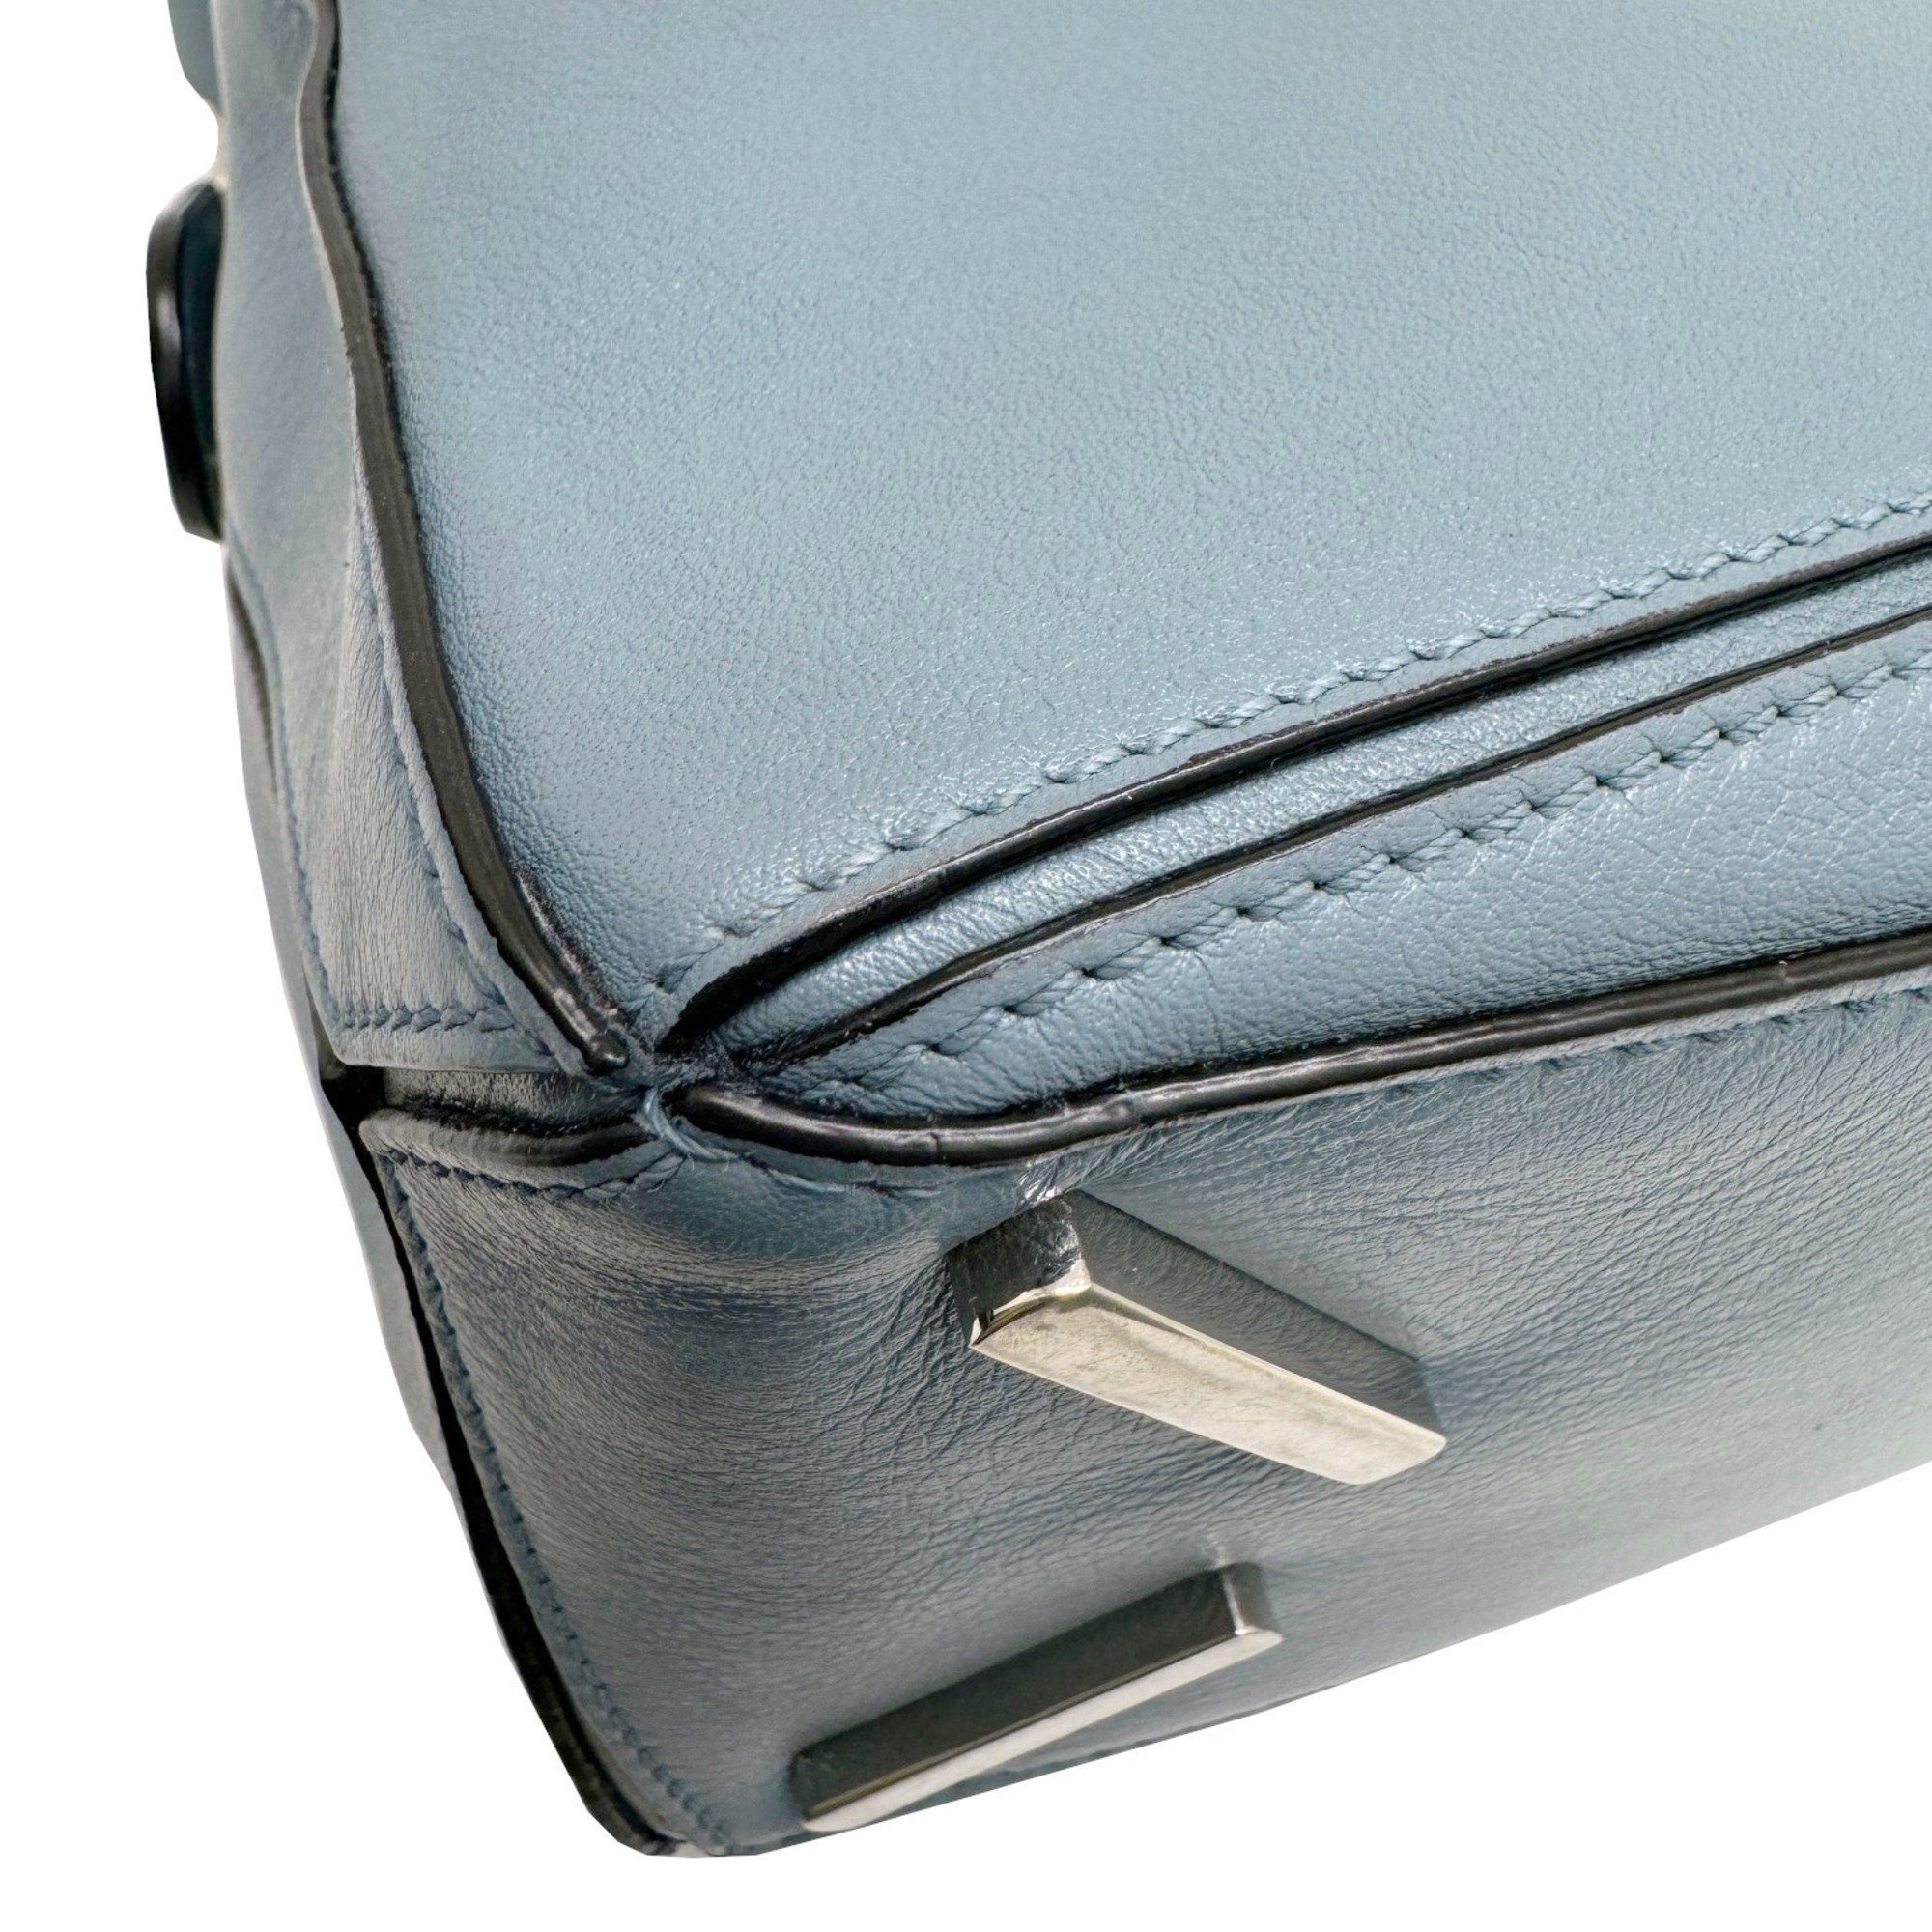 LOEWE Puzzle Bag Small 322.30.S21 Handbag Shoulder Soft Grain Calf Leather Blue Women Men